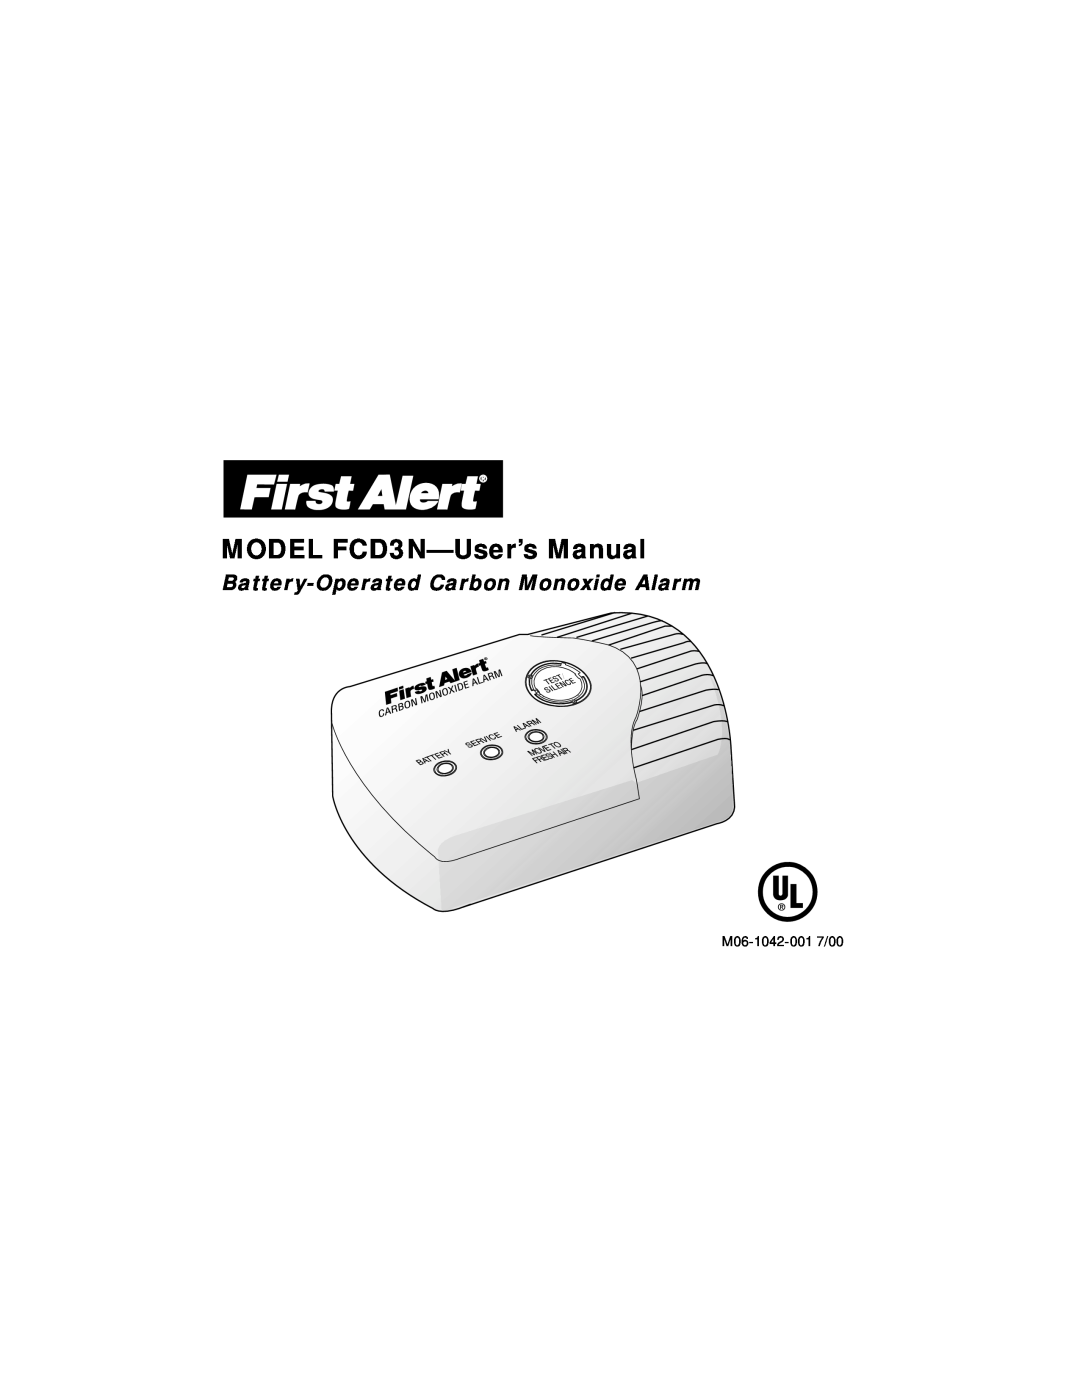 First Alert user manual MODEL FCD3N-User’sManual, Battery-OperatedCarbon Monoxide Alarm 